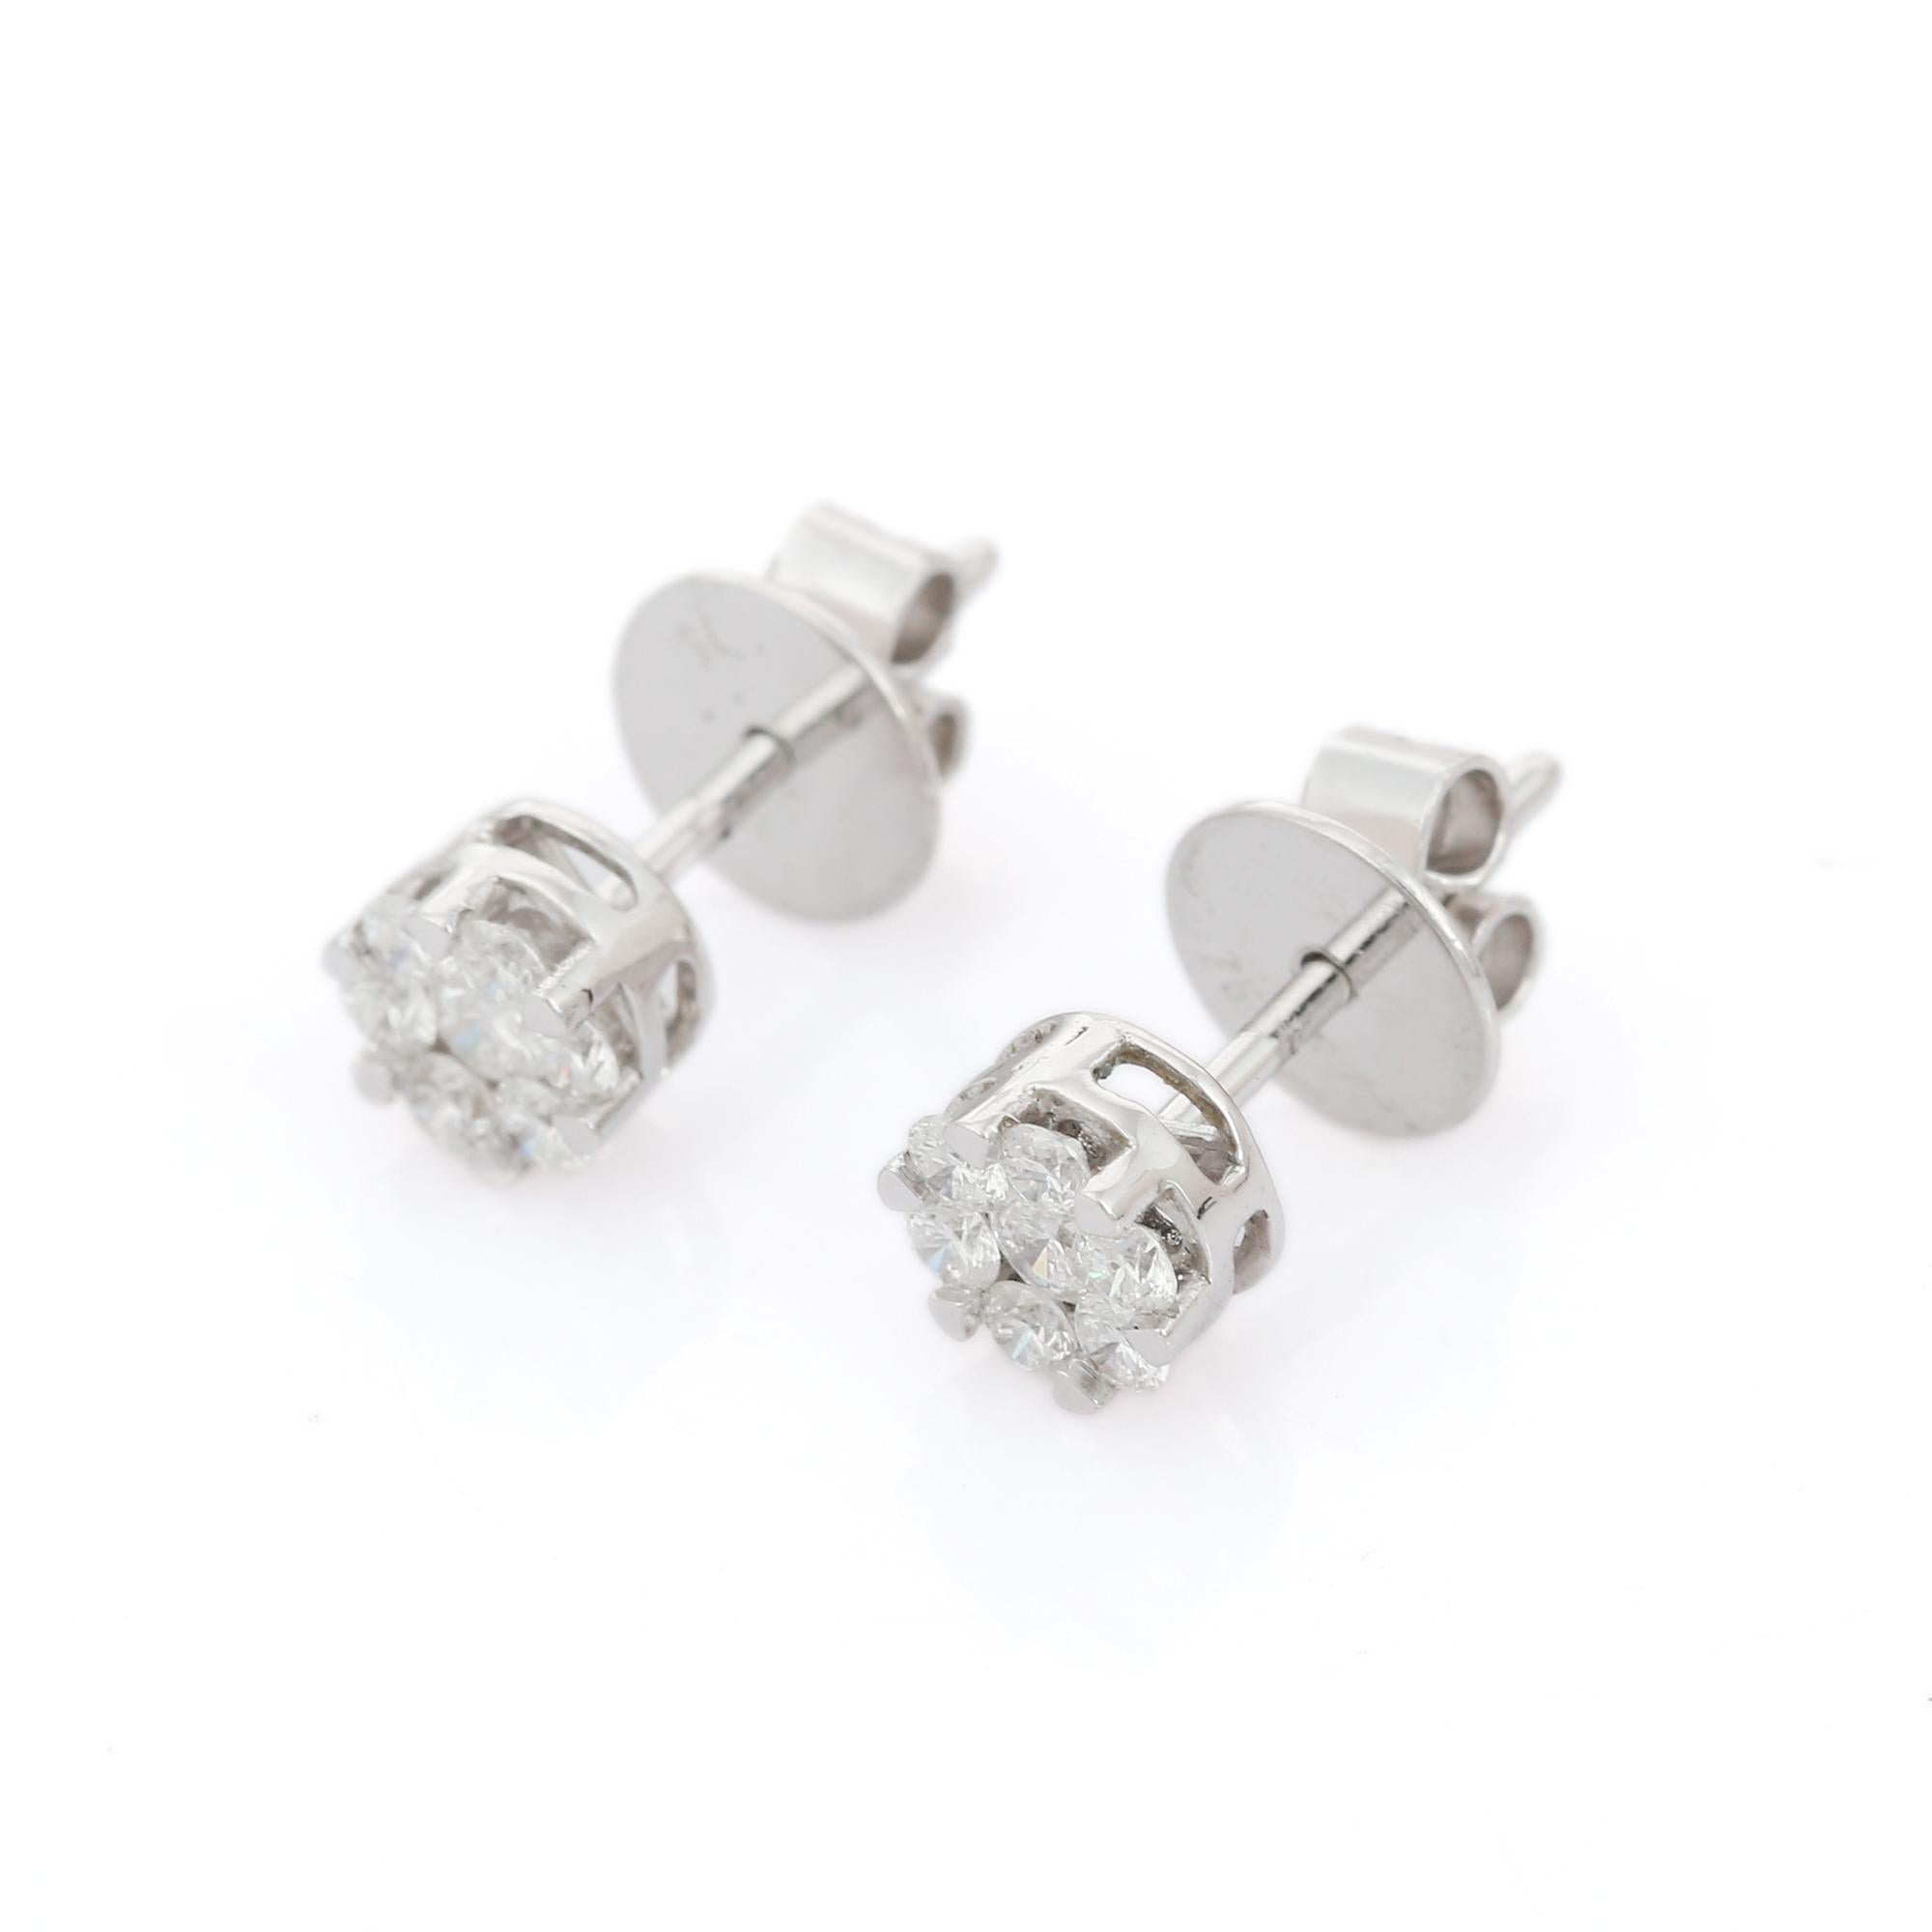 0.5 carat diamond earrings price